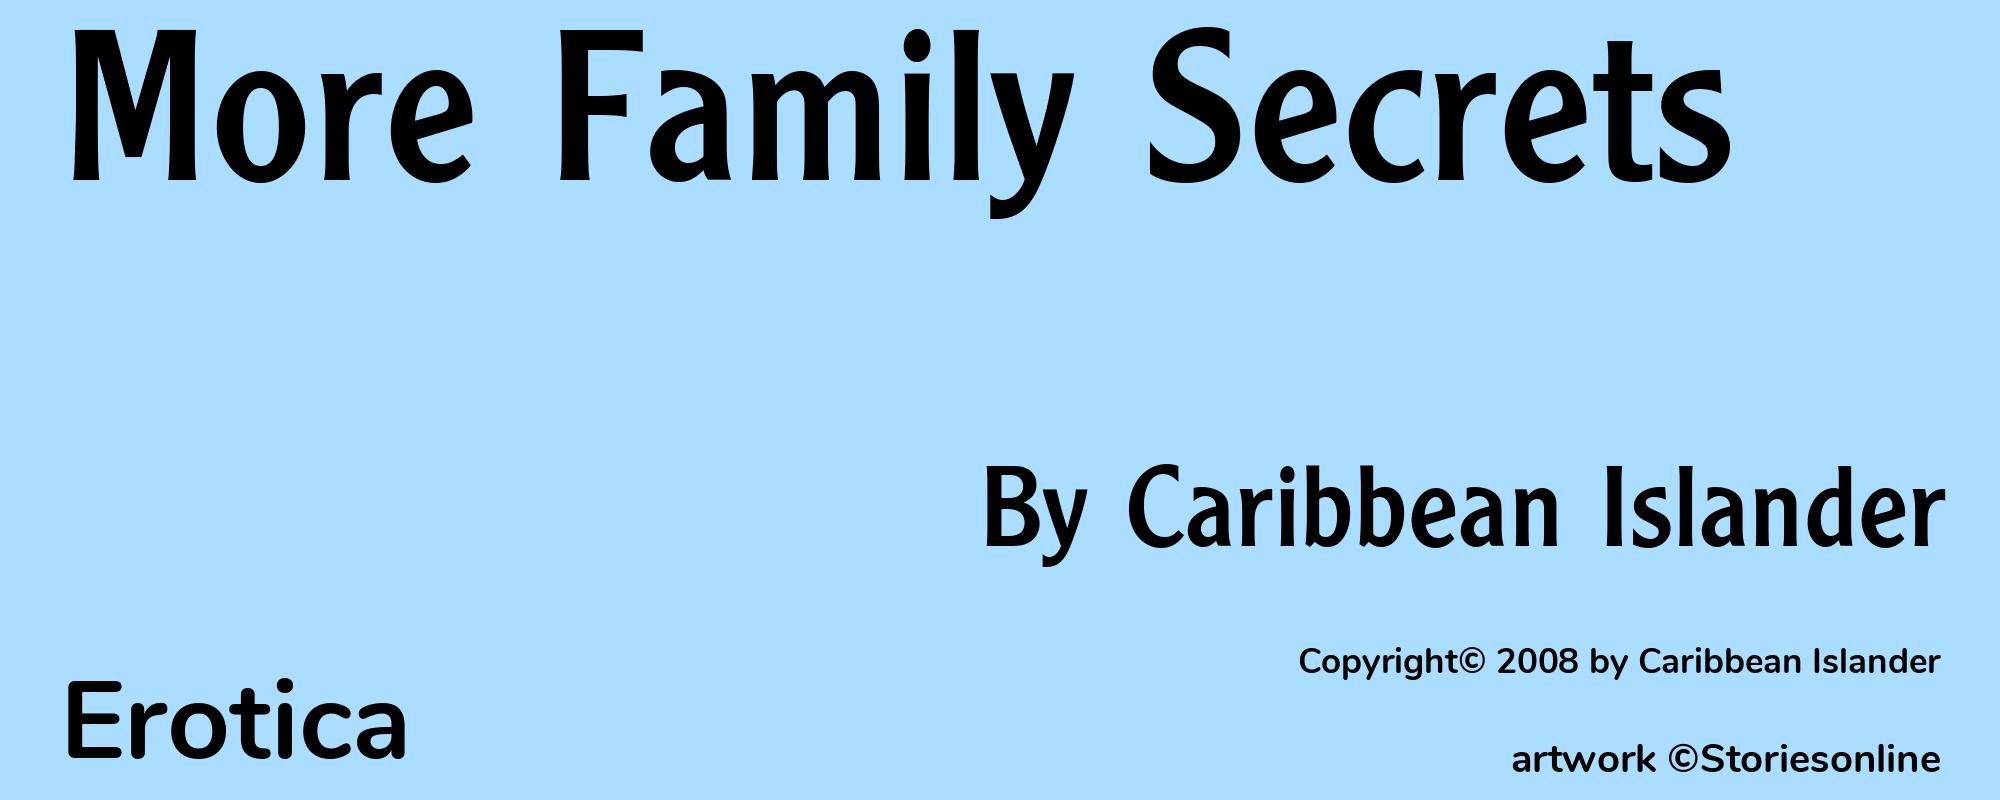 More Family Secrets - Cover